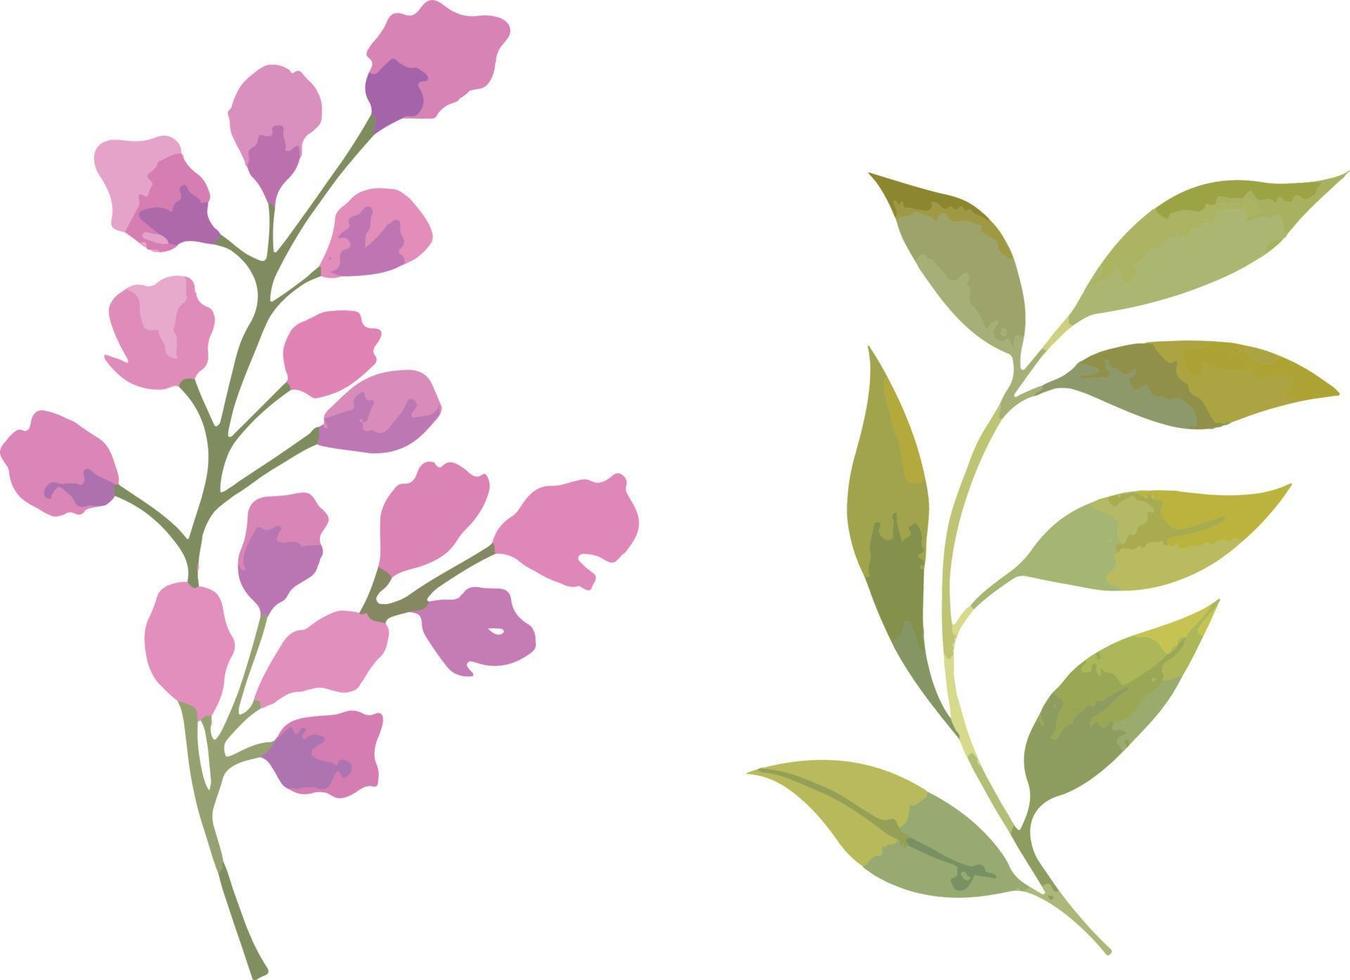 Set of vector watercolor flowers, botanical illustration in magenta color. Ideal for wedding cards, prints, patterns, packaging design.